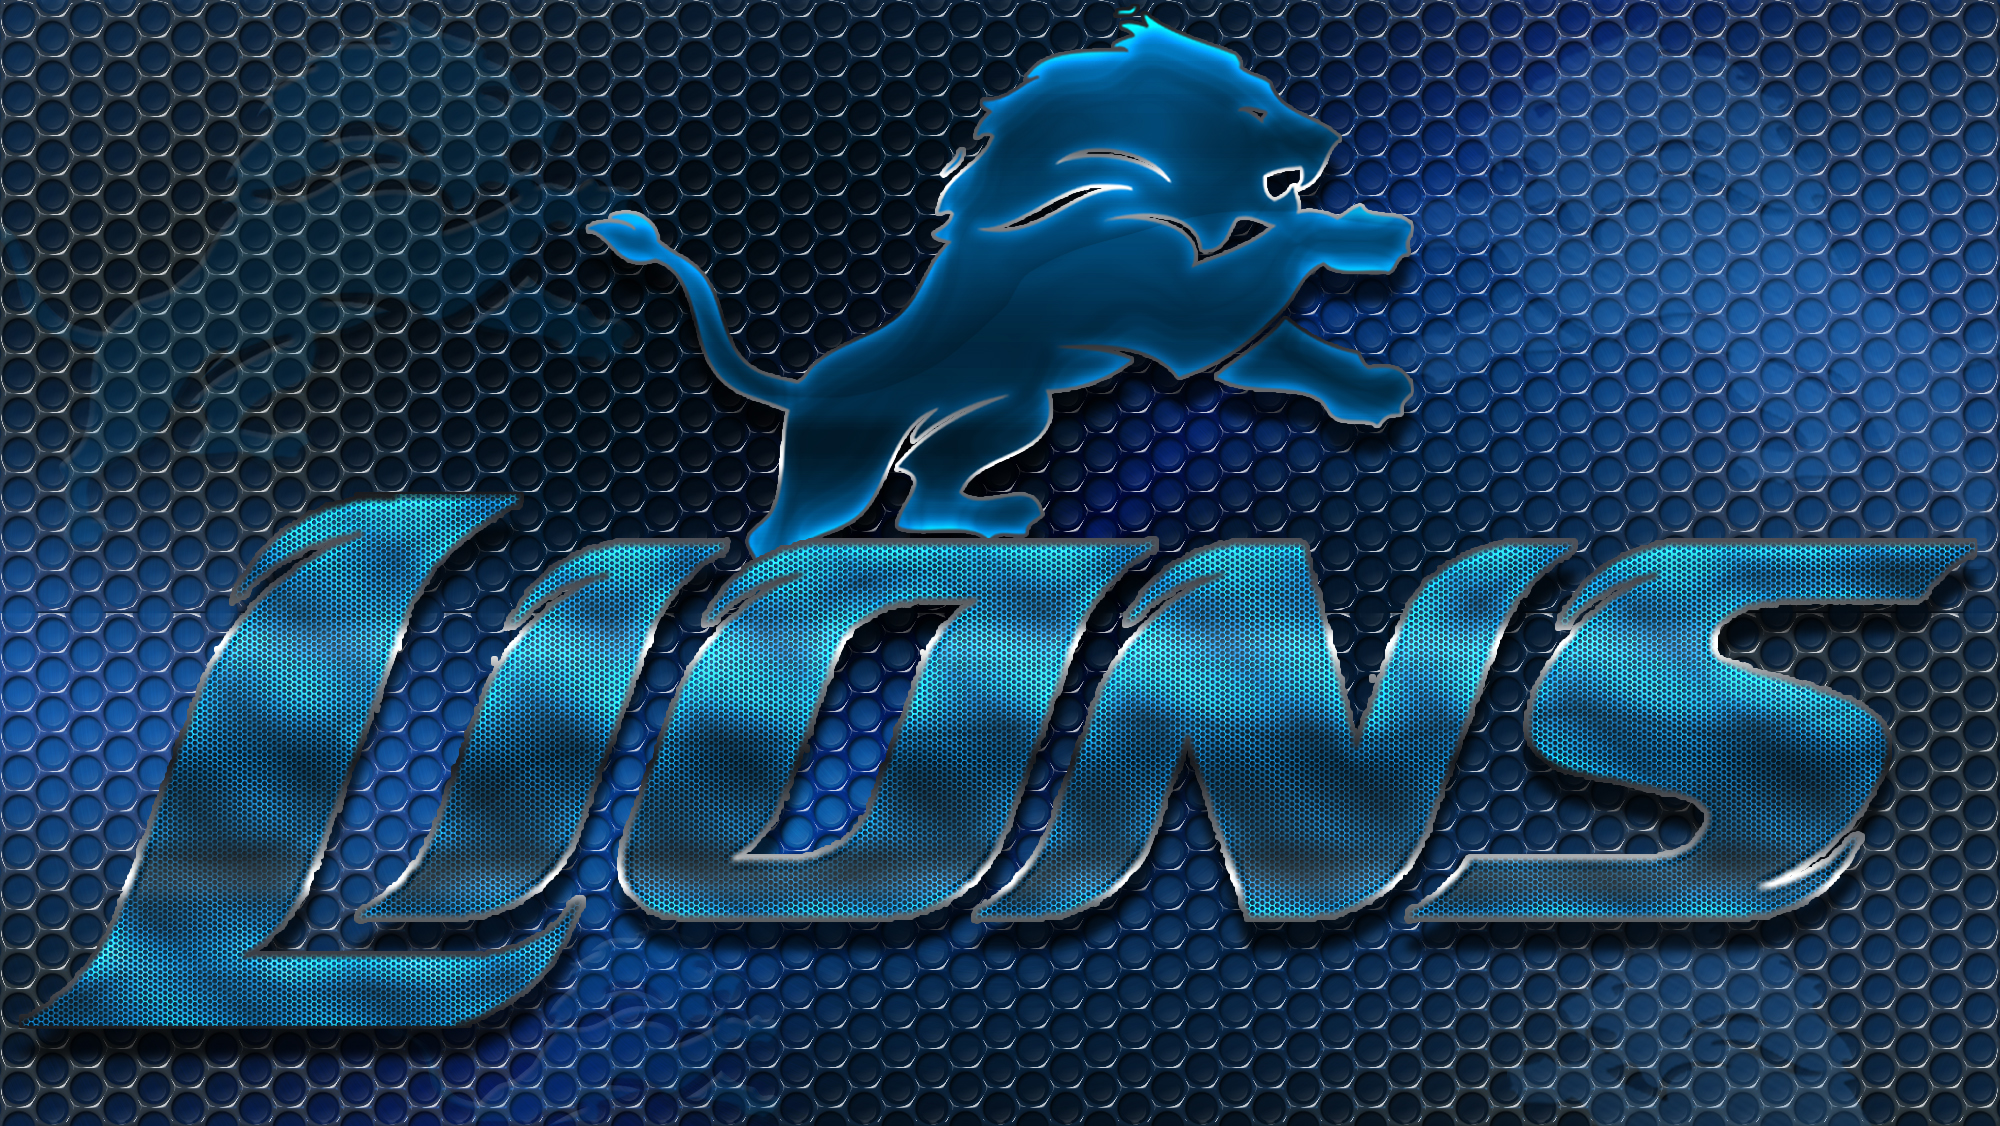 Detroit Lions Football Team Logo Wallpaper